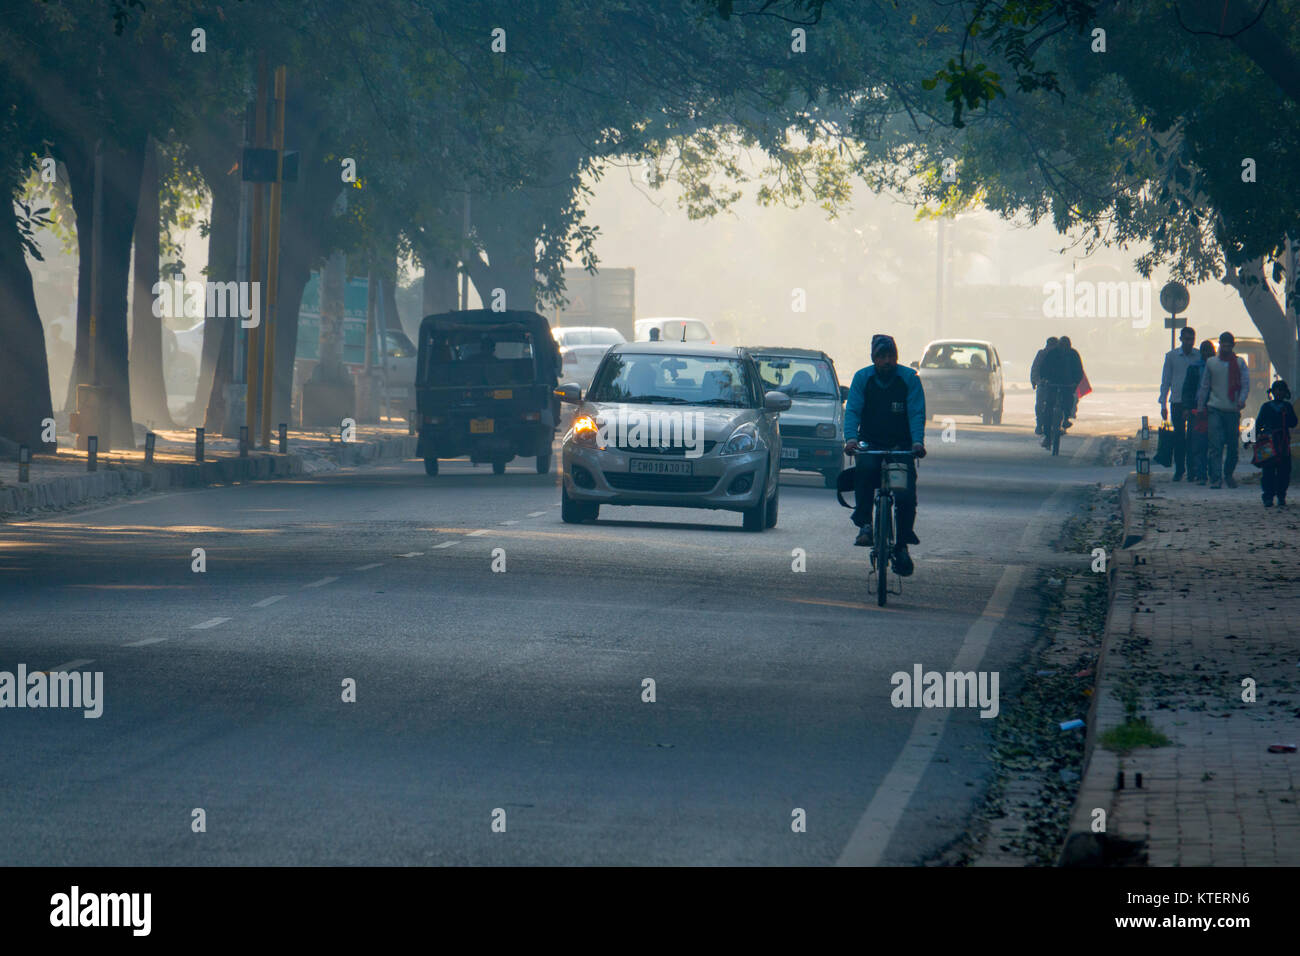 La circulation dans la rue bordée de Chandigarh, Inde Banque D'Images